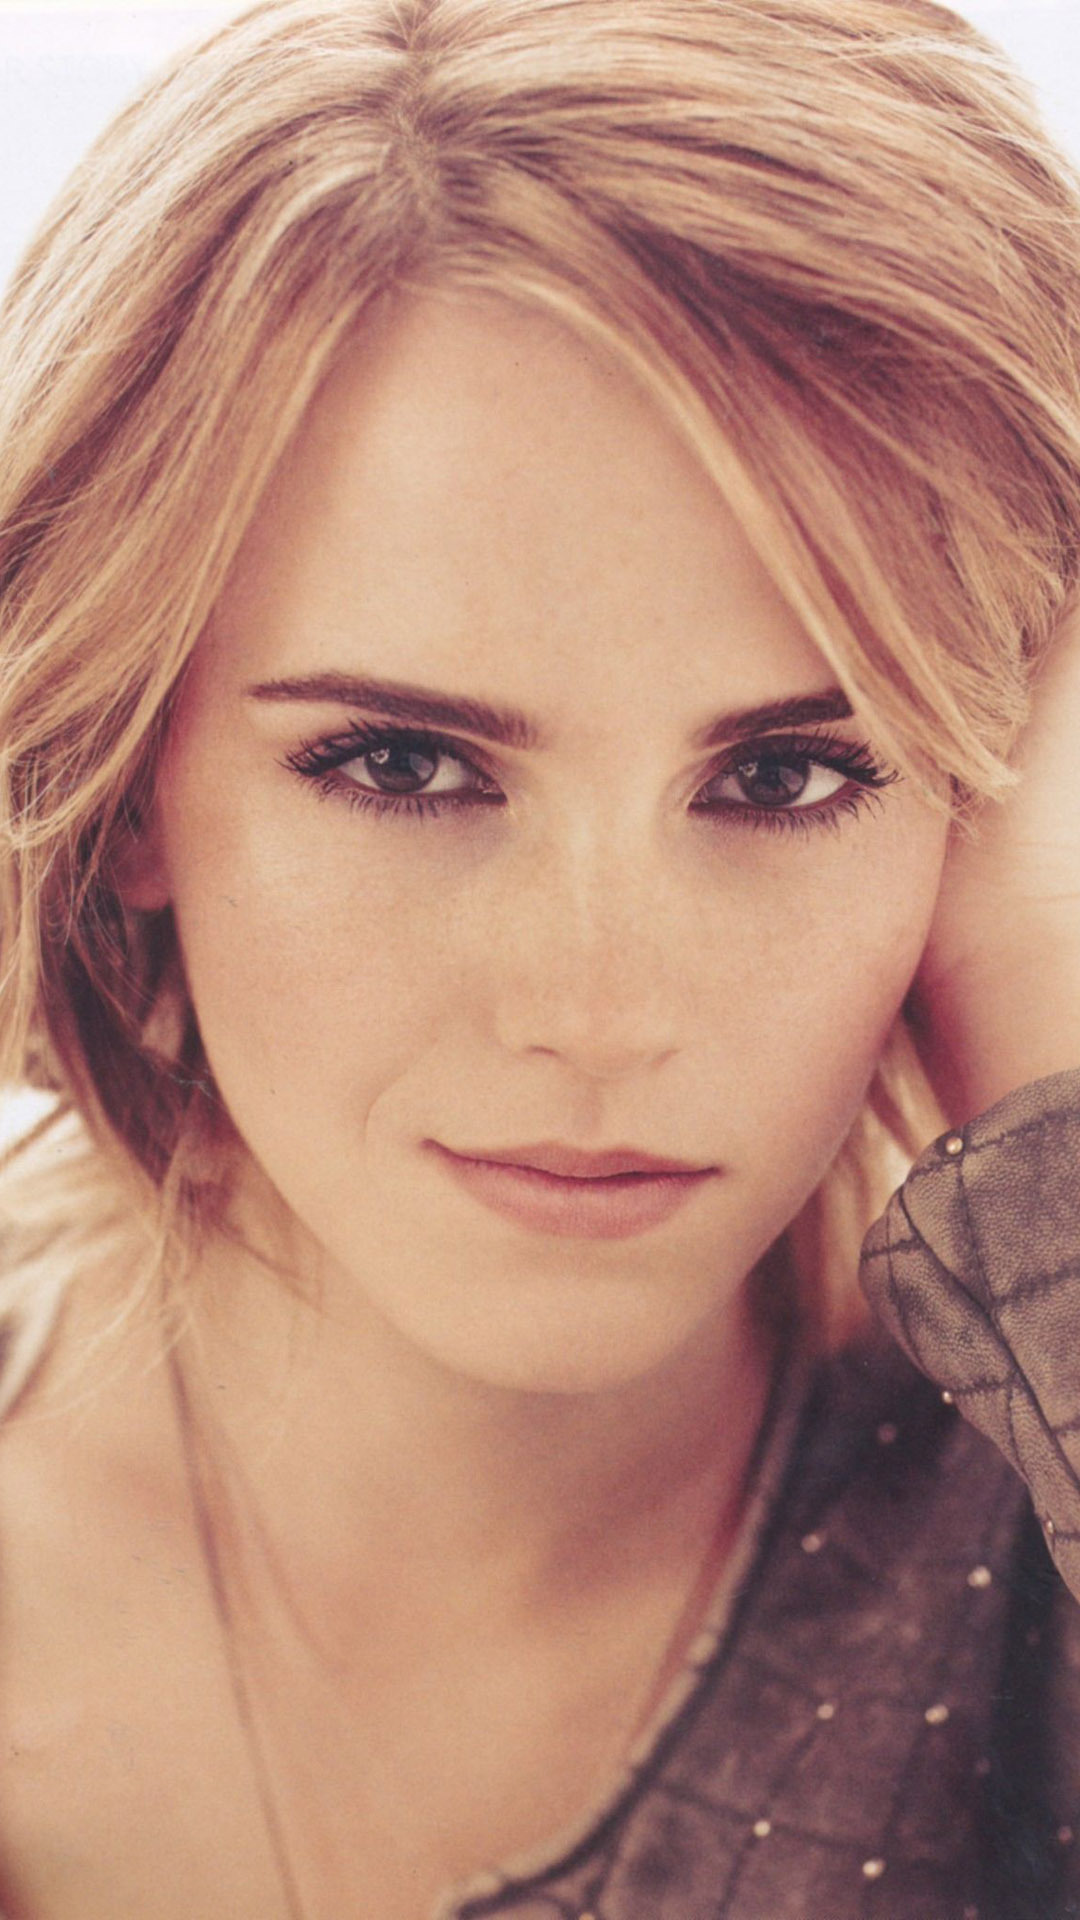 Emma Watson iPhone Wallpapers | PixelsTalk.Net